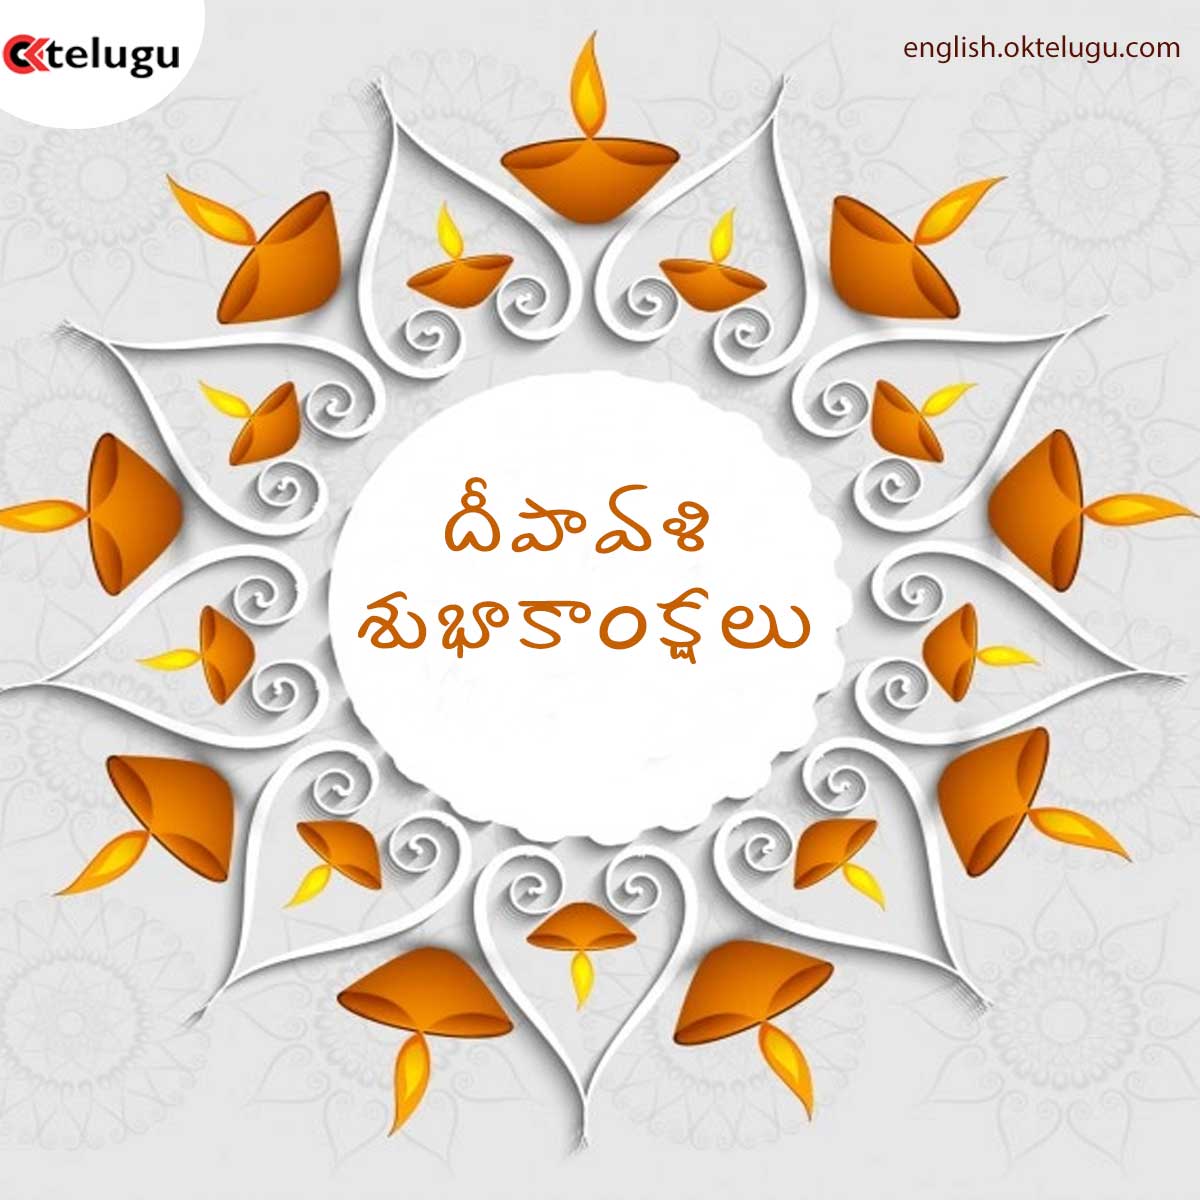 Diwali wishes Telugu 2021 and Diwali Images Telugu 2021 ...